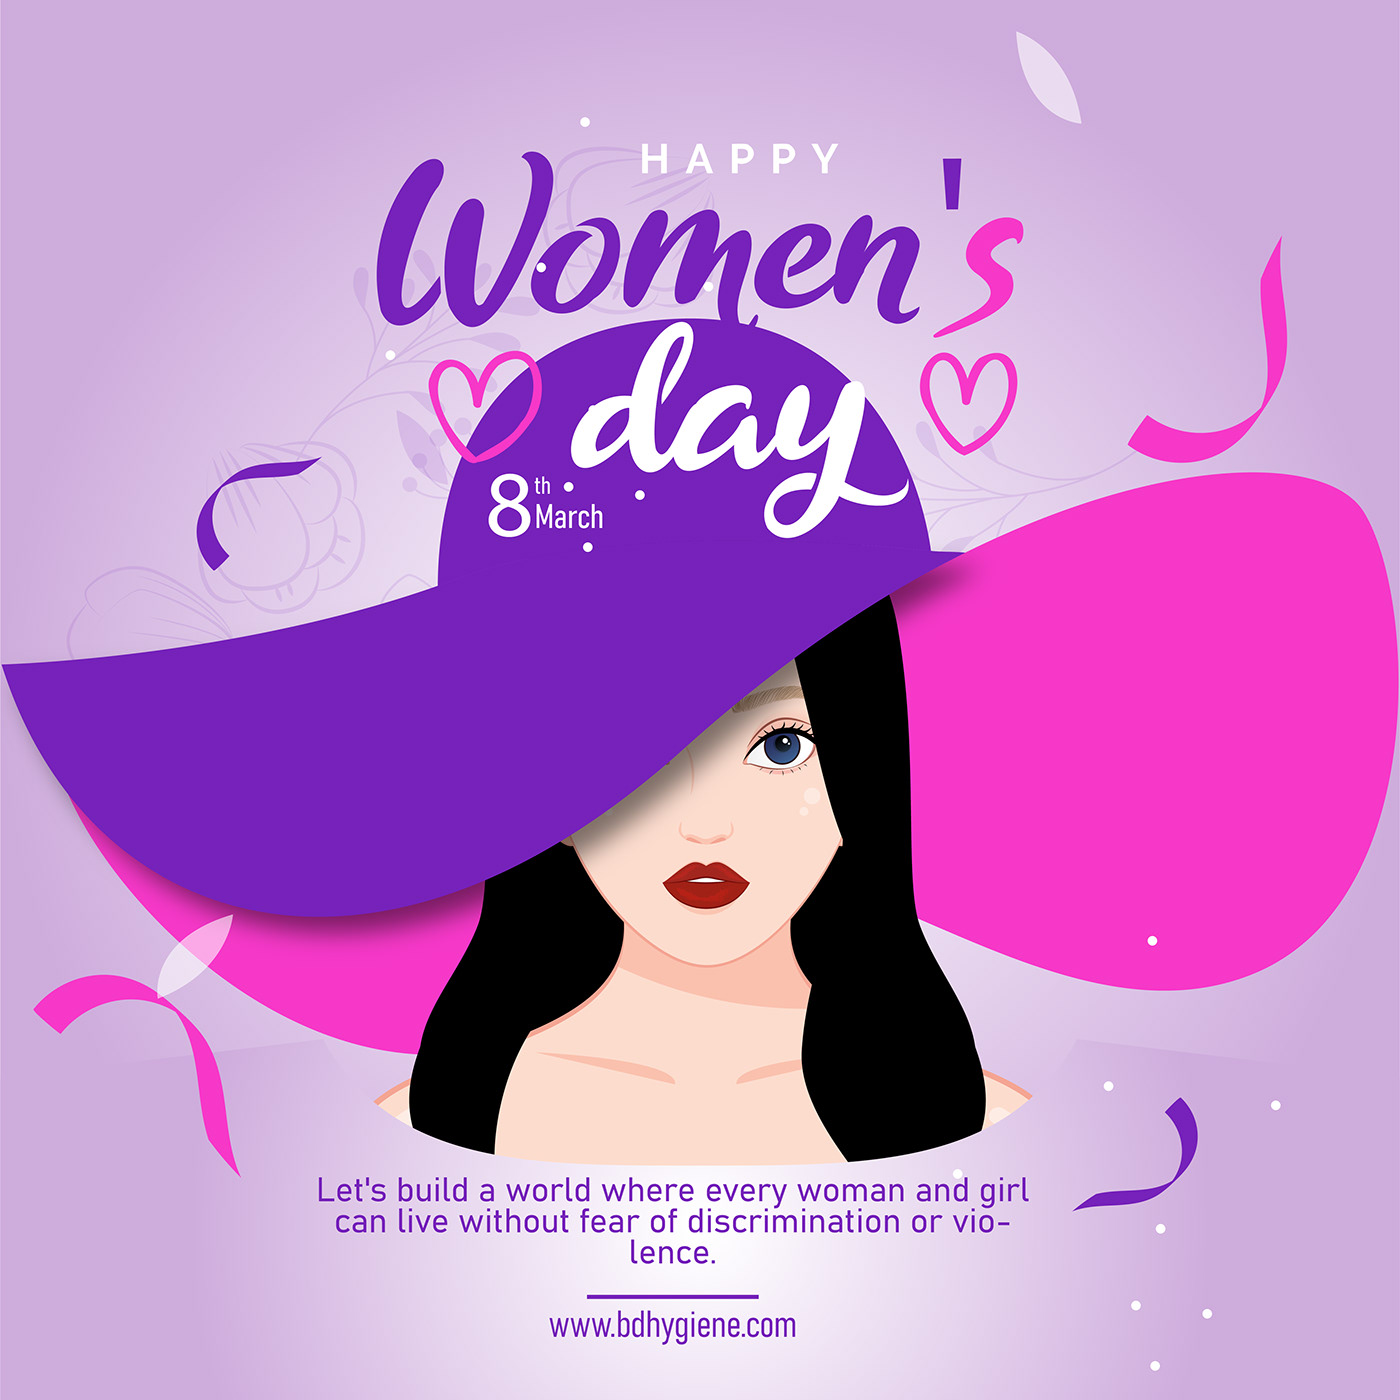 womans day 8 march International Women's Day Poster Design Social media post Graphic Designer Socialmedia